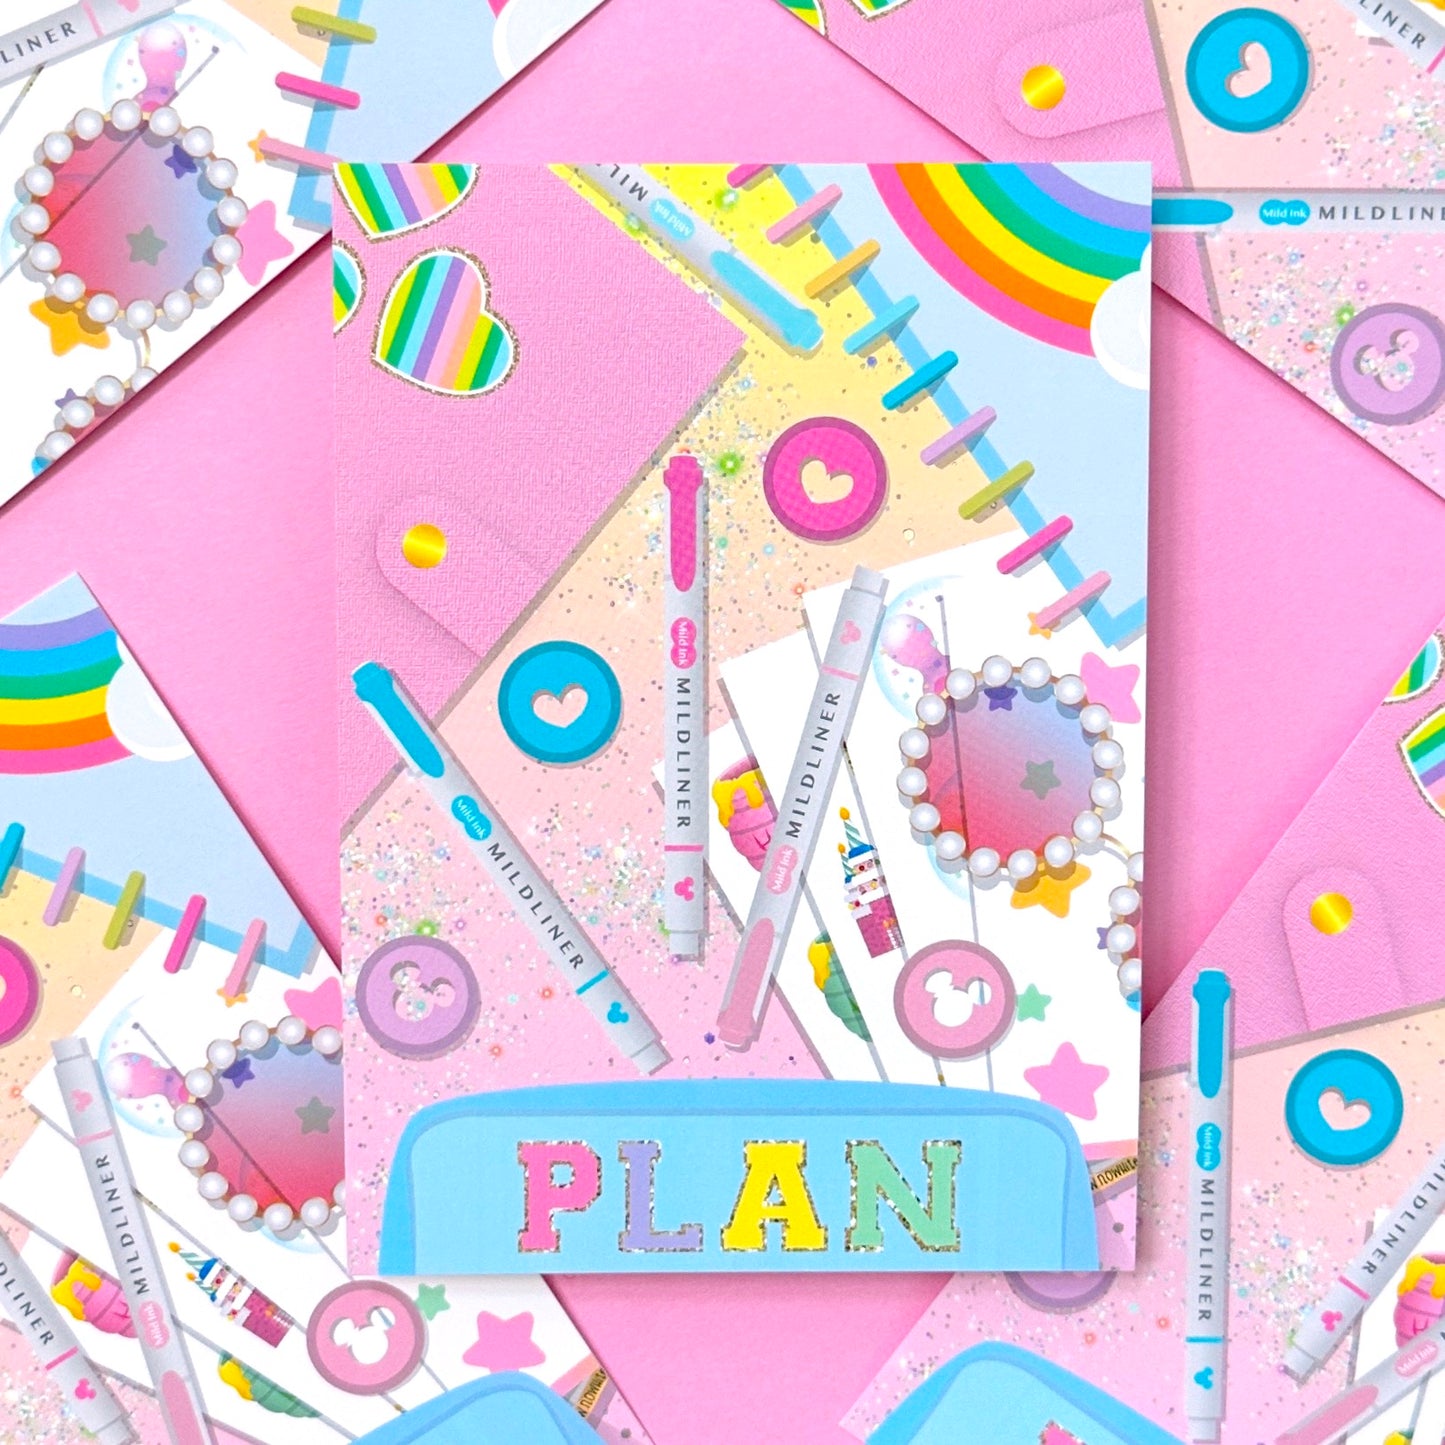 PREMIUM LUXE ART CARD - "PLAN" Flatlay